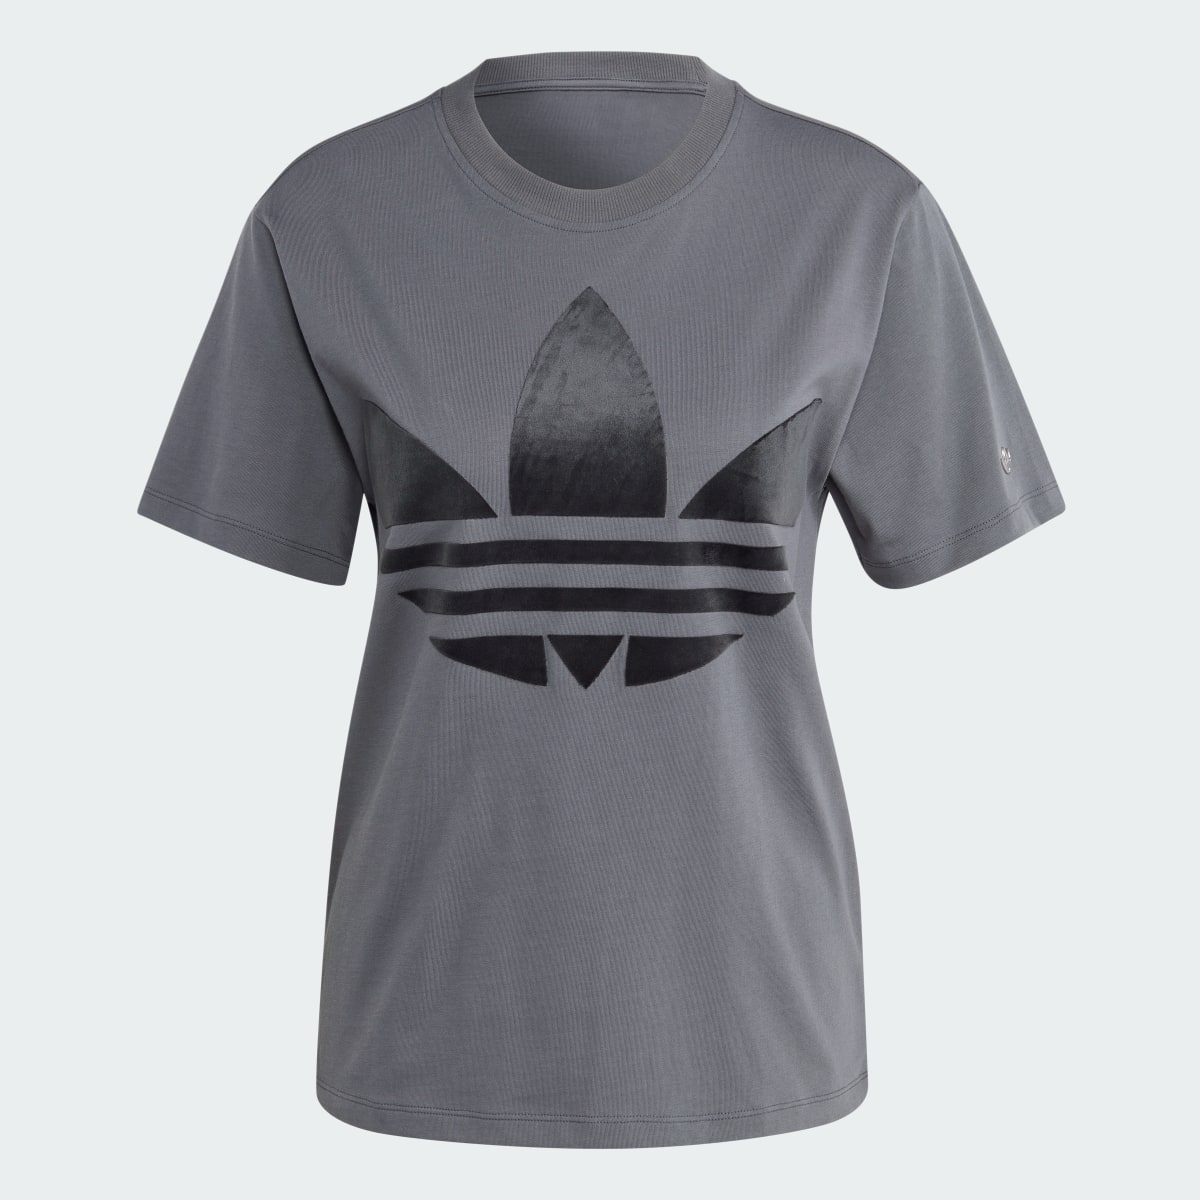 Adidas Large Trefoil T-Shirt. 5